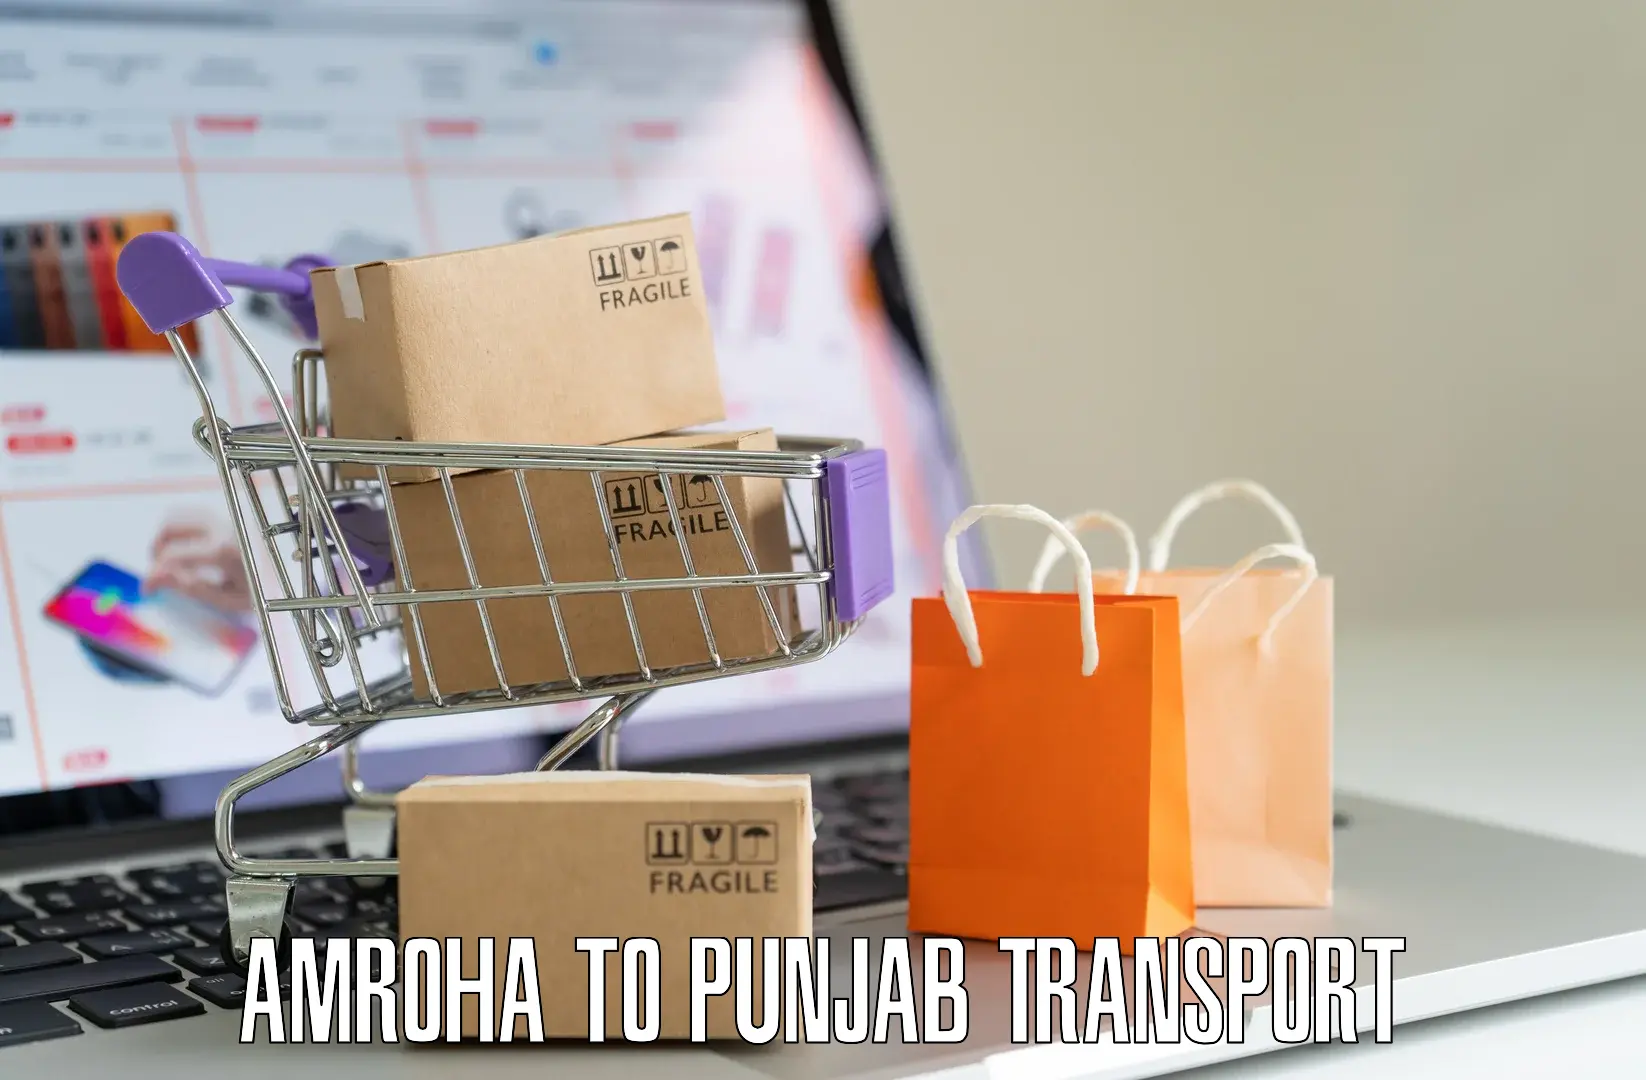 Transport in sharing Amroha to Jalalabad